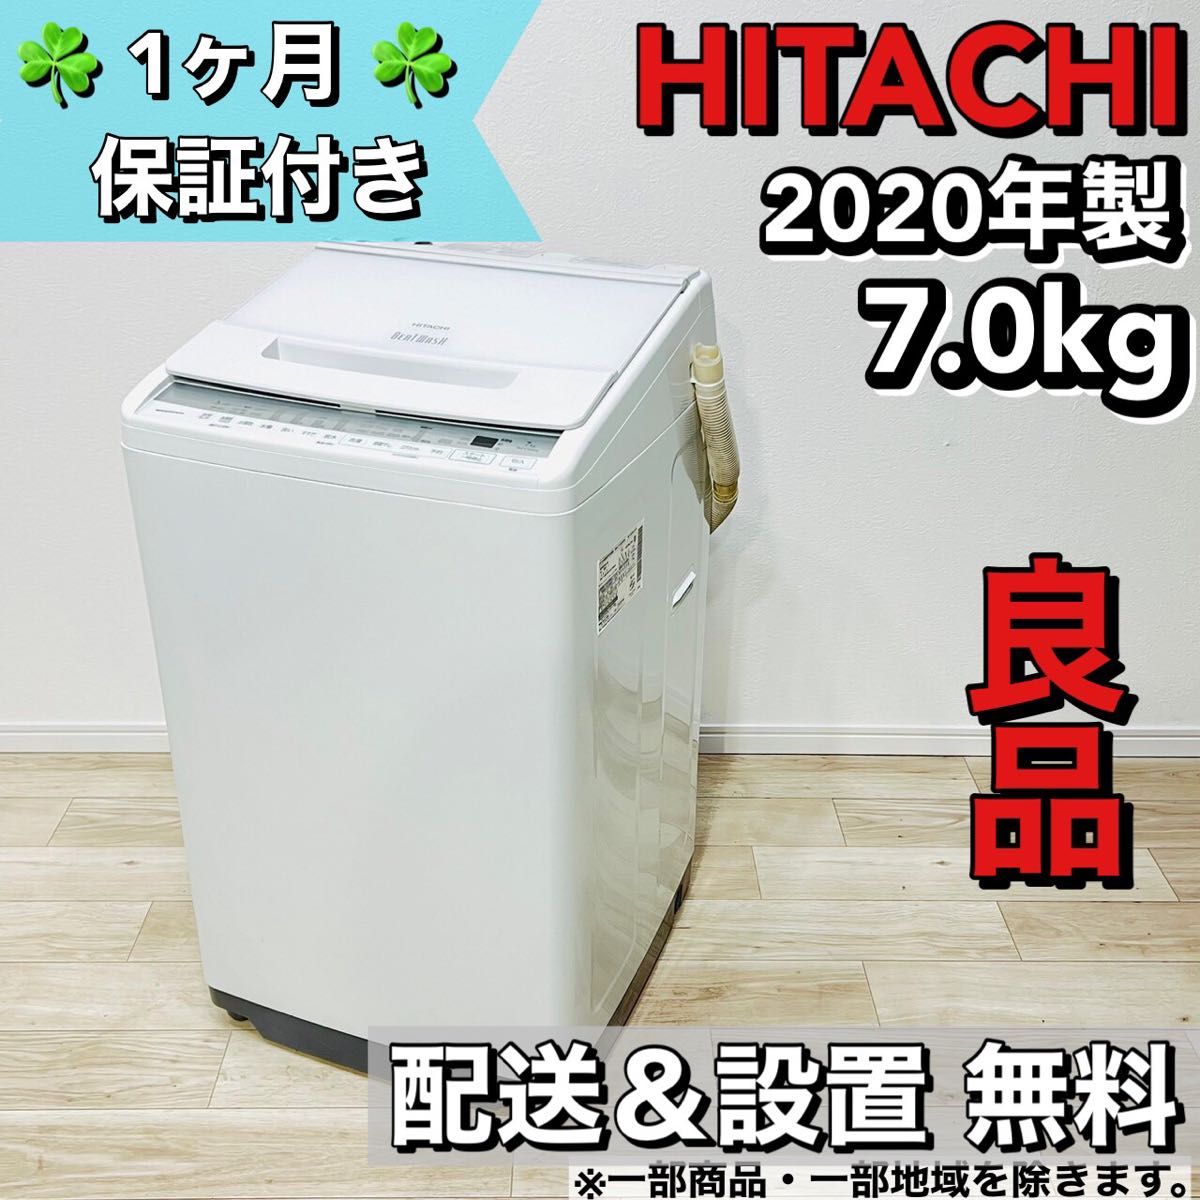 HITACHI 洗濯機 7.0kg 2020年製 a1016 16,- 生活家電 洗濯機 www